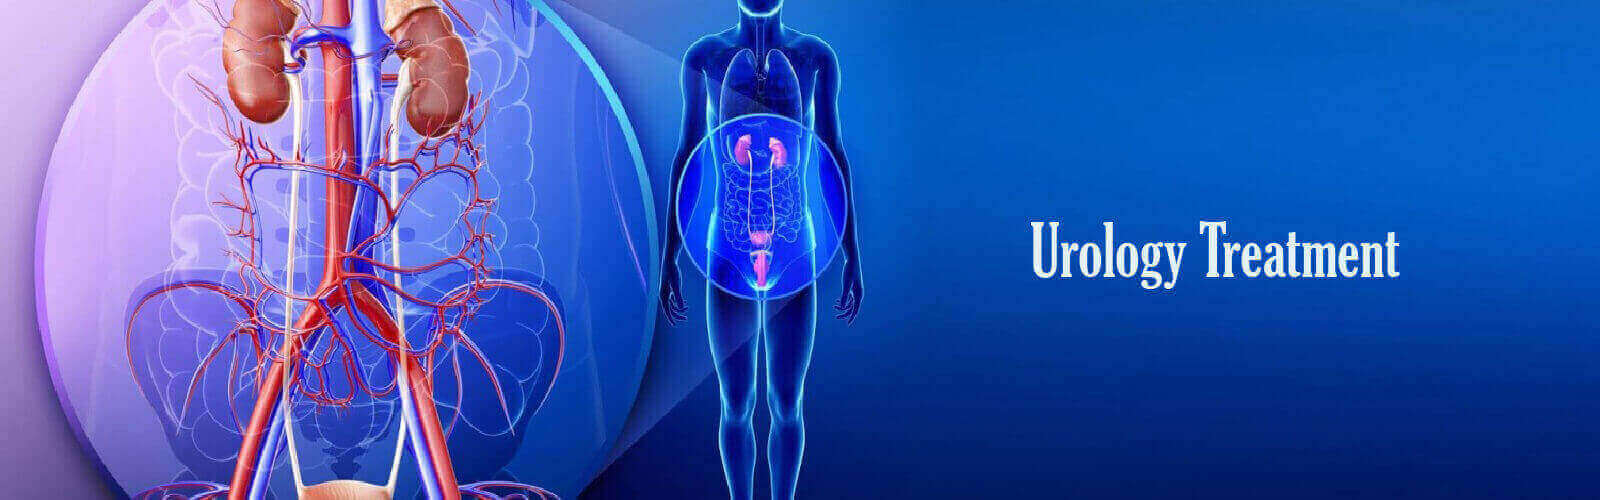 Urology Treatment in Dubai